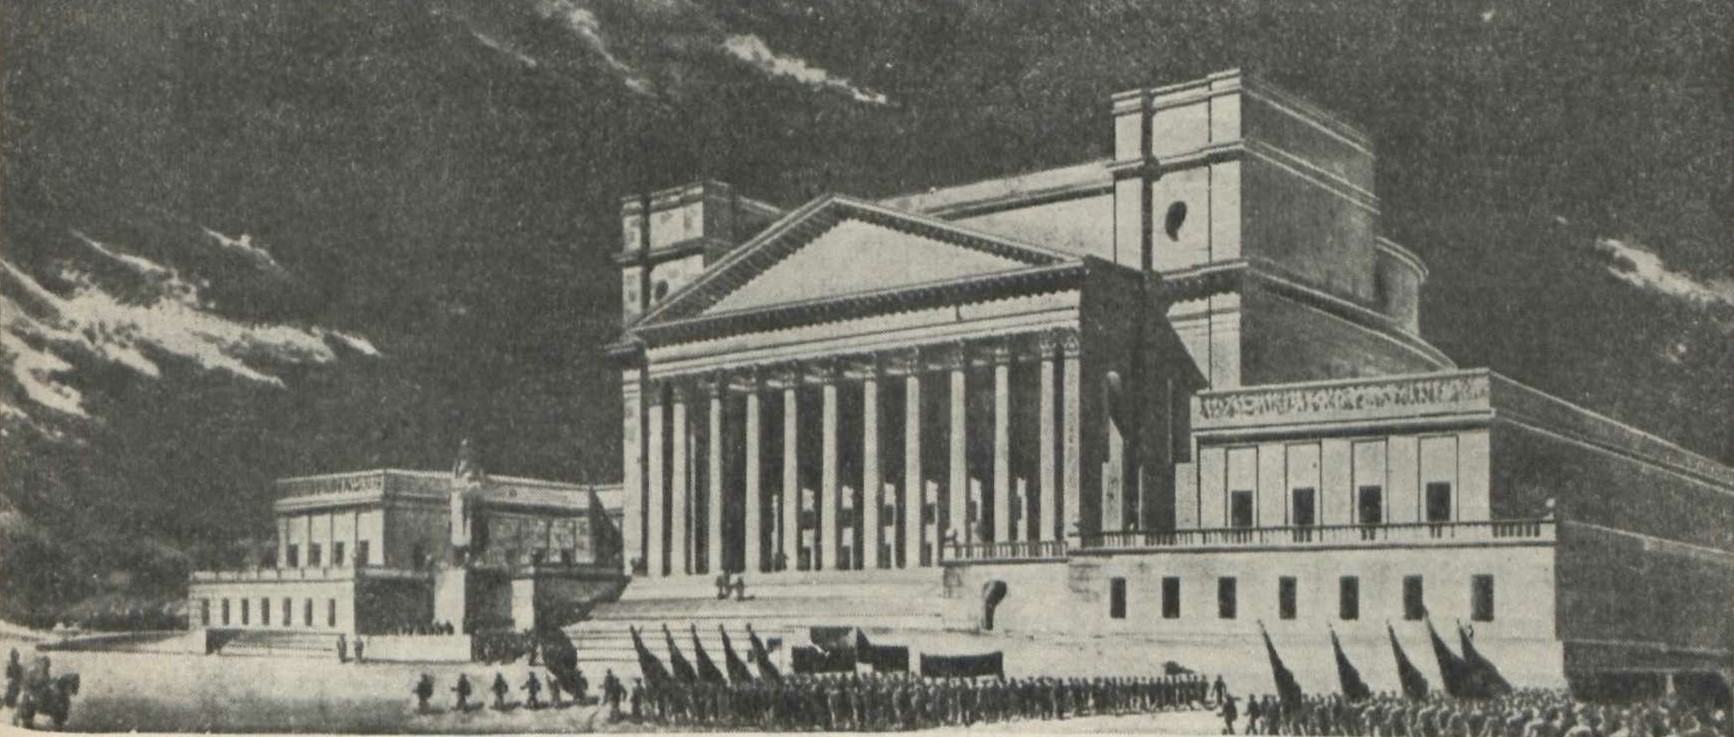 Дворец Культуры в г. Куйбышеве (1935). Перспектива